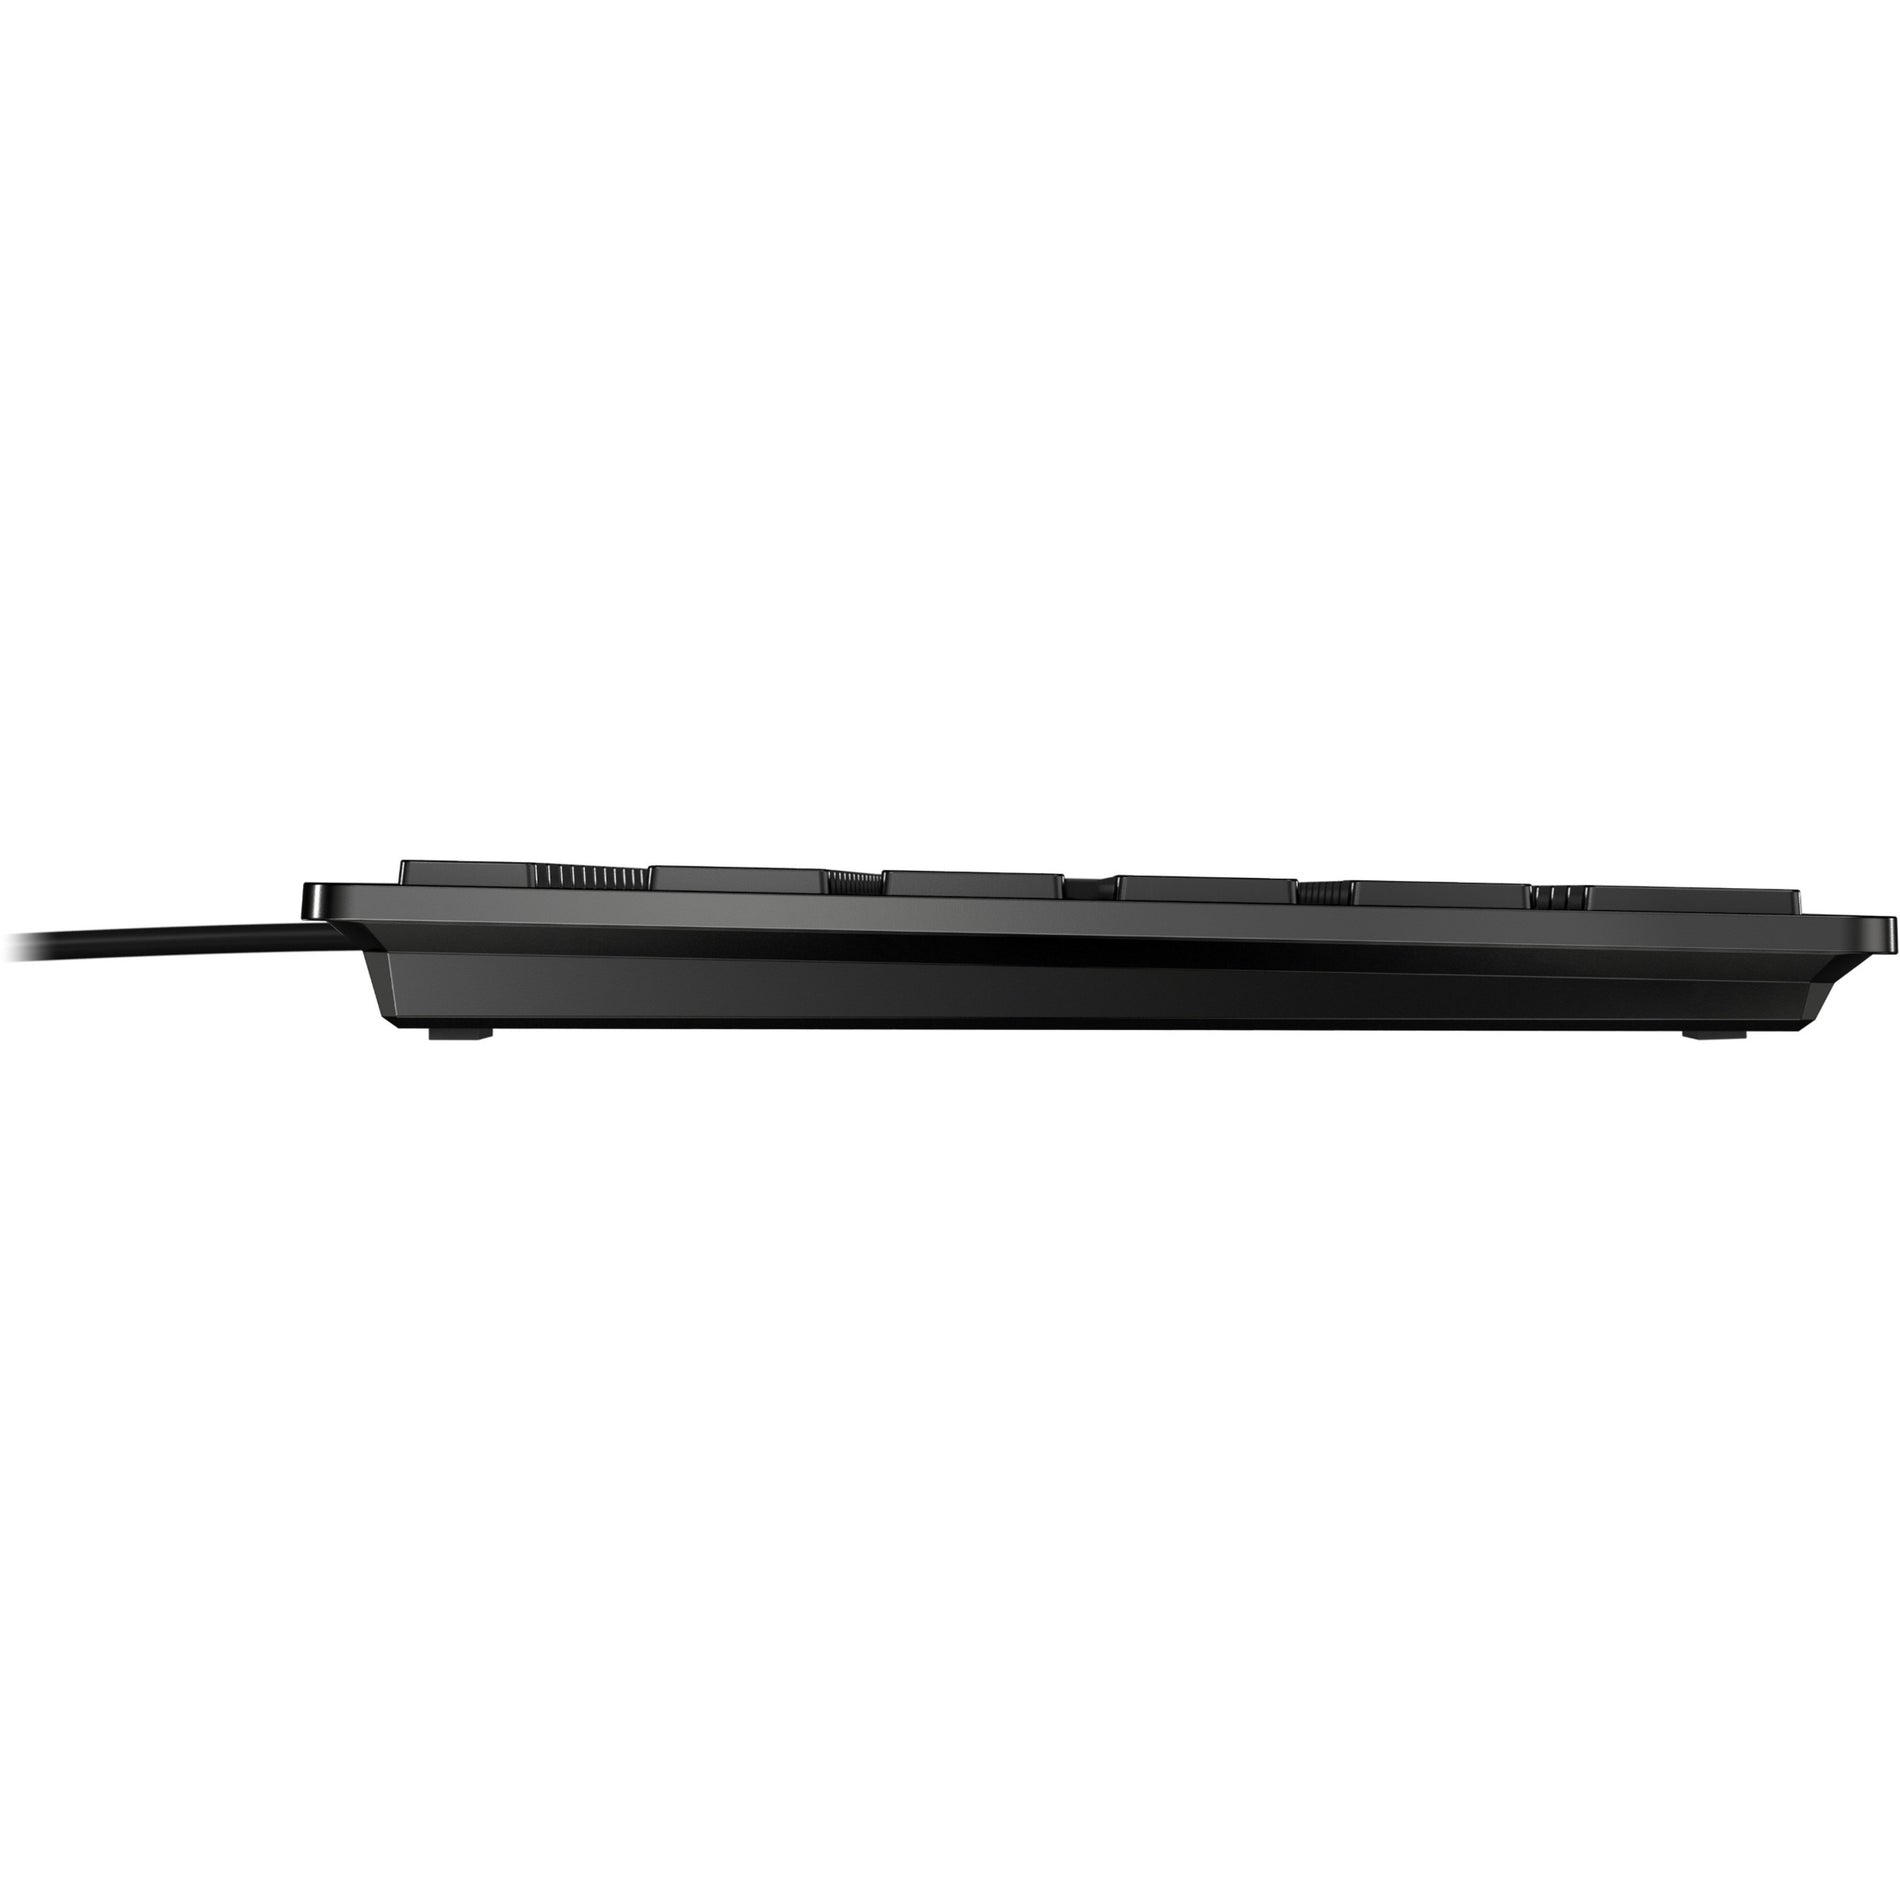 CHERRY JK-1600EU-2 KC 6000 SLIM Black Wired Keyboard, Multimedia Hot Keys, QWERTZ Layout